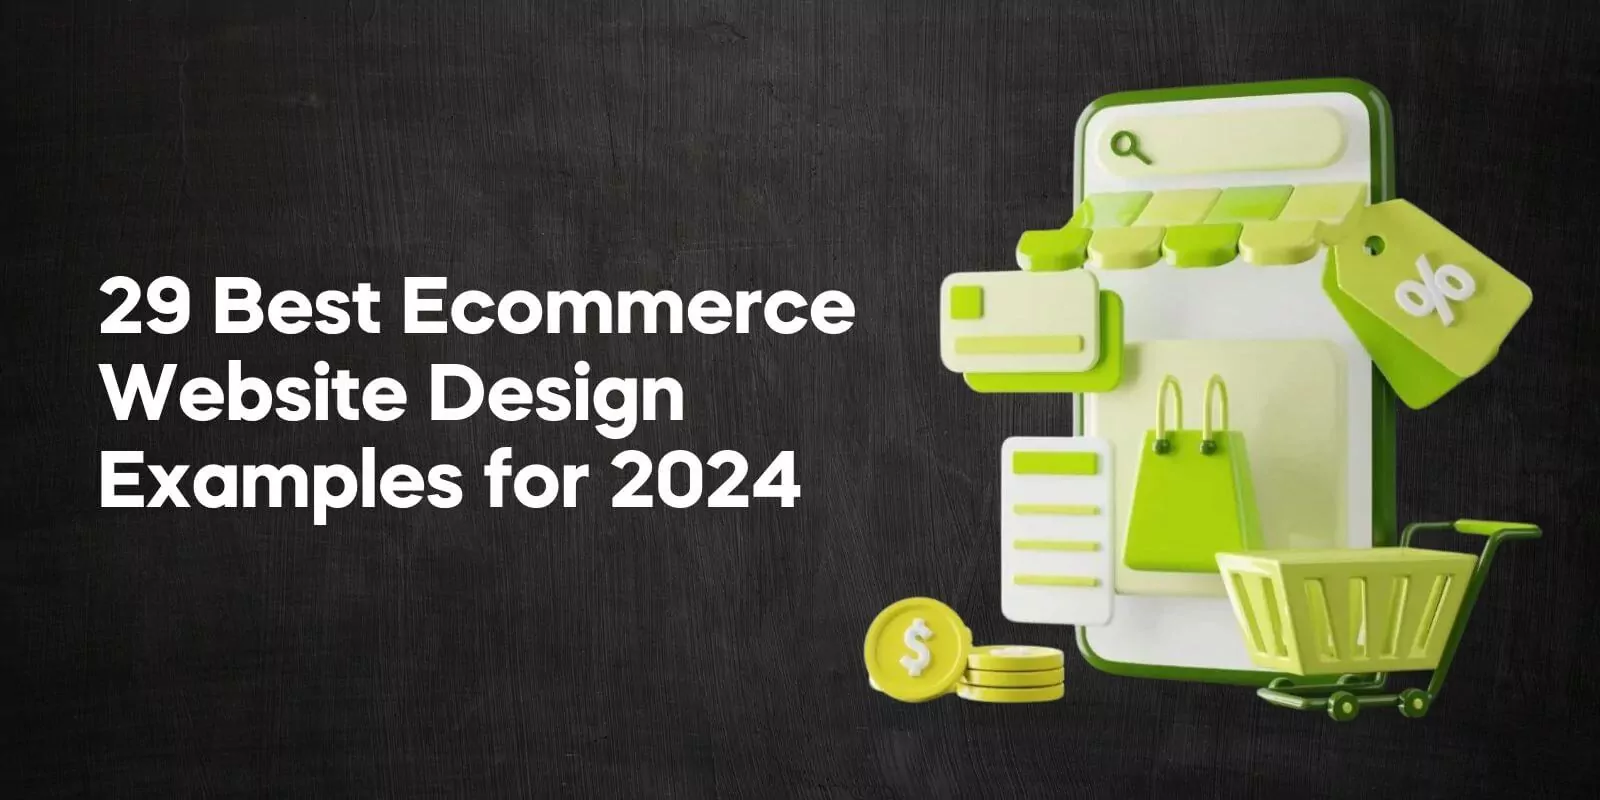 29 Best Ecommerce Website Design Examples for 2024